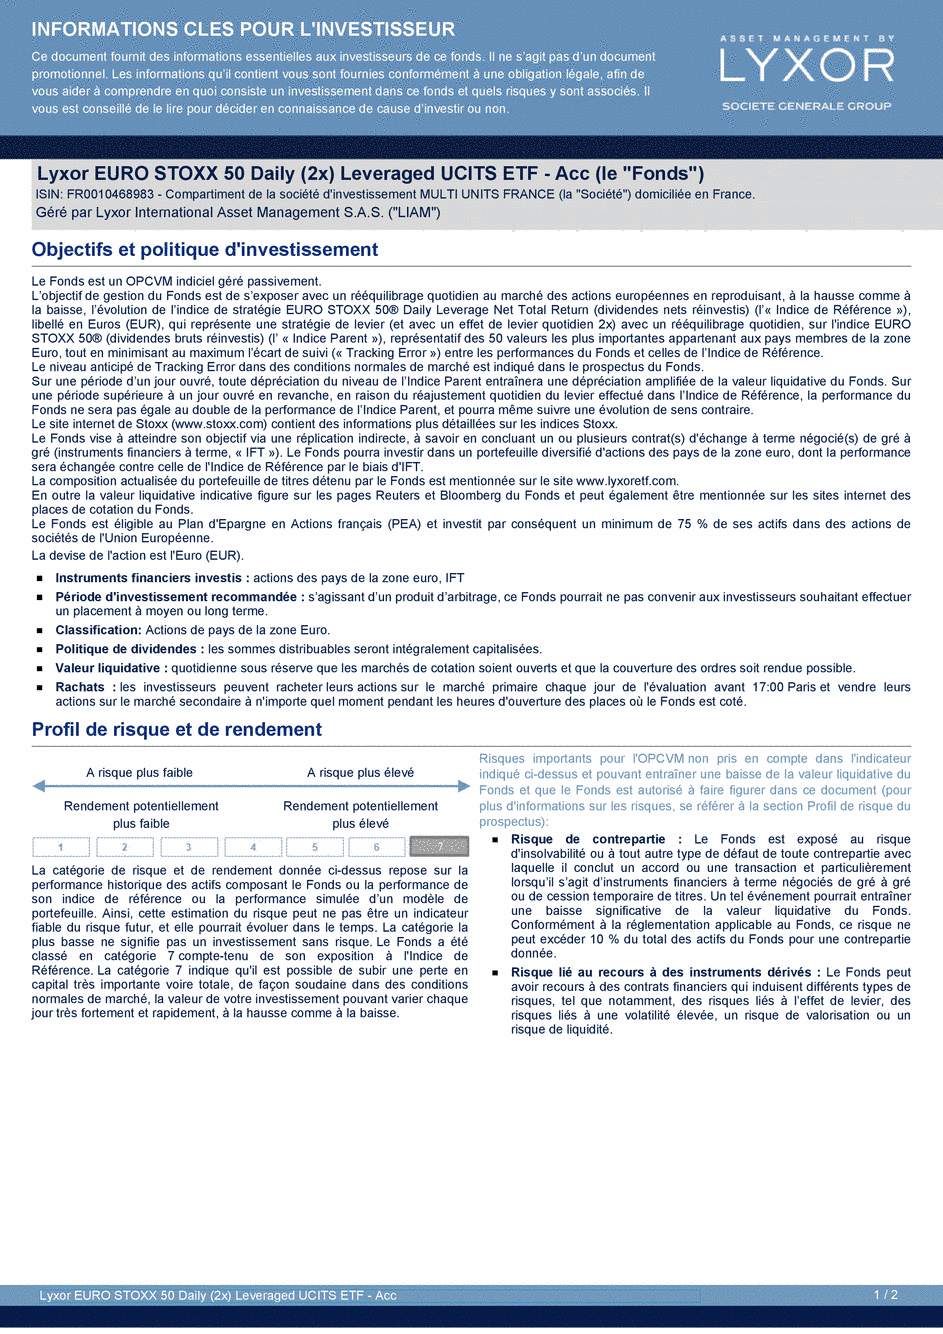 DICI Lyxor EURO STOXX 50 Daily (2x) Leveraged UCITS ETF - Acc - 19/02/2021 - Français